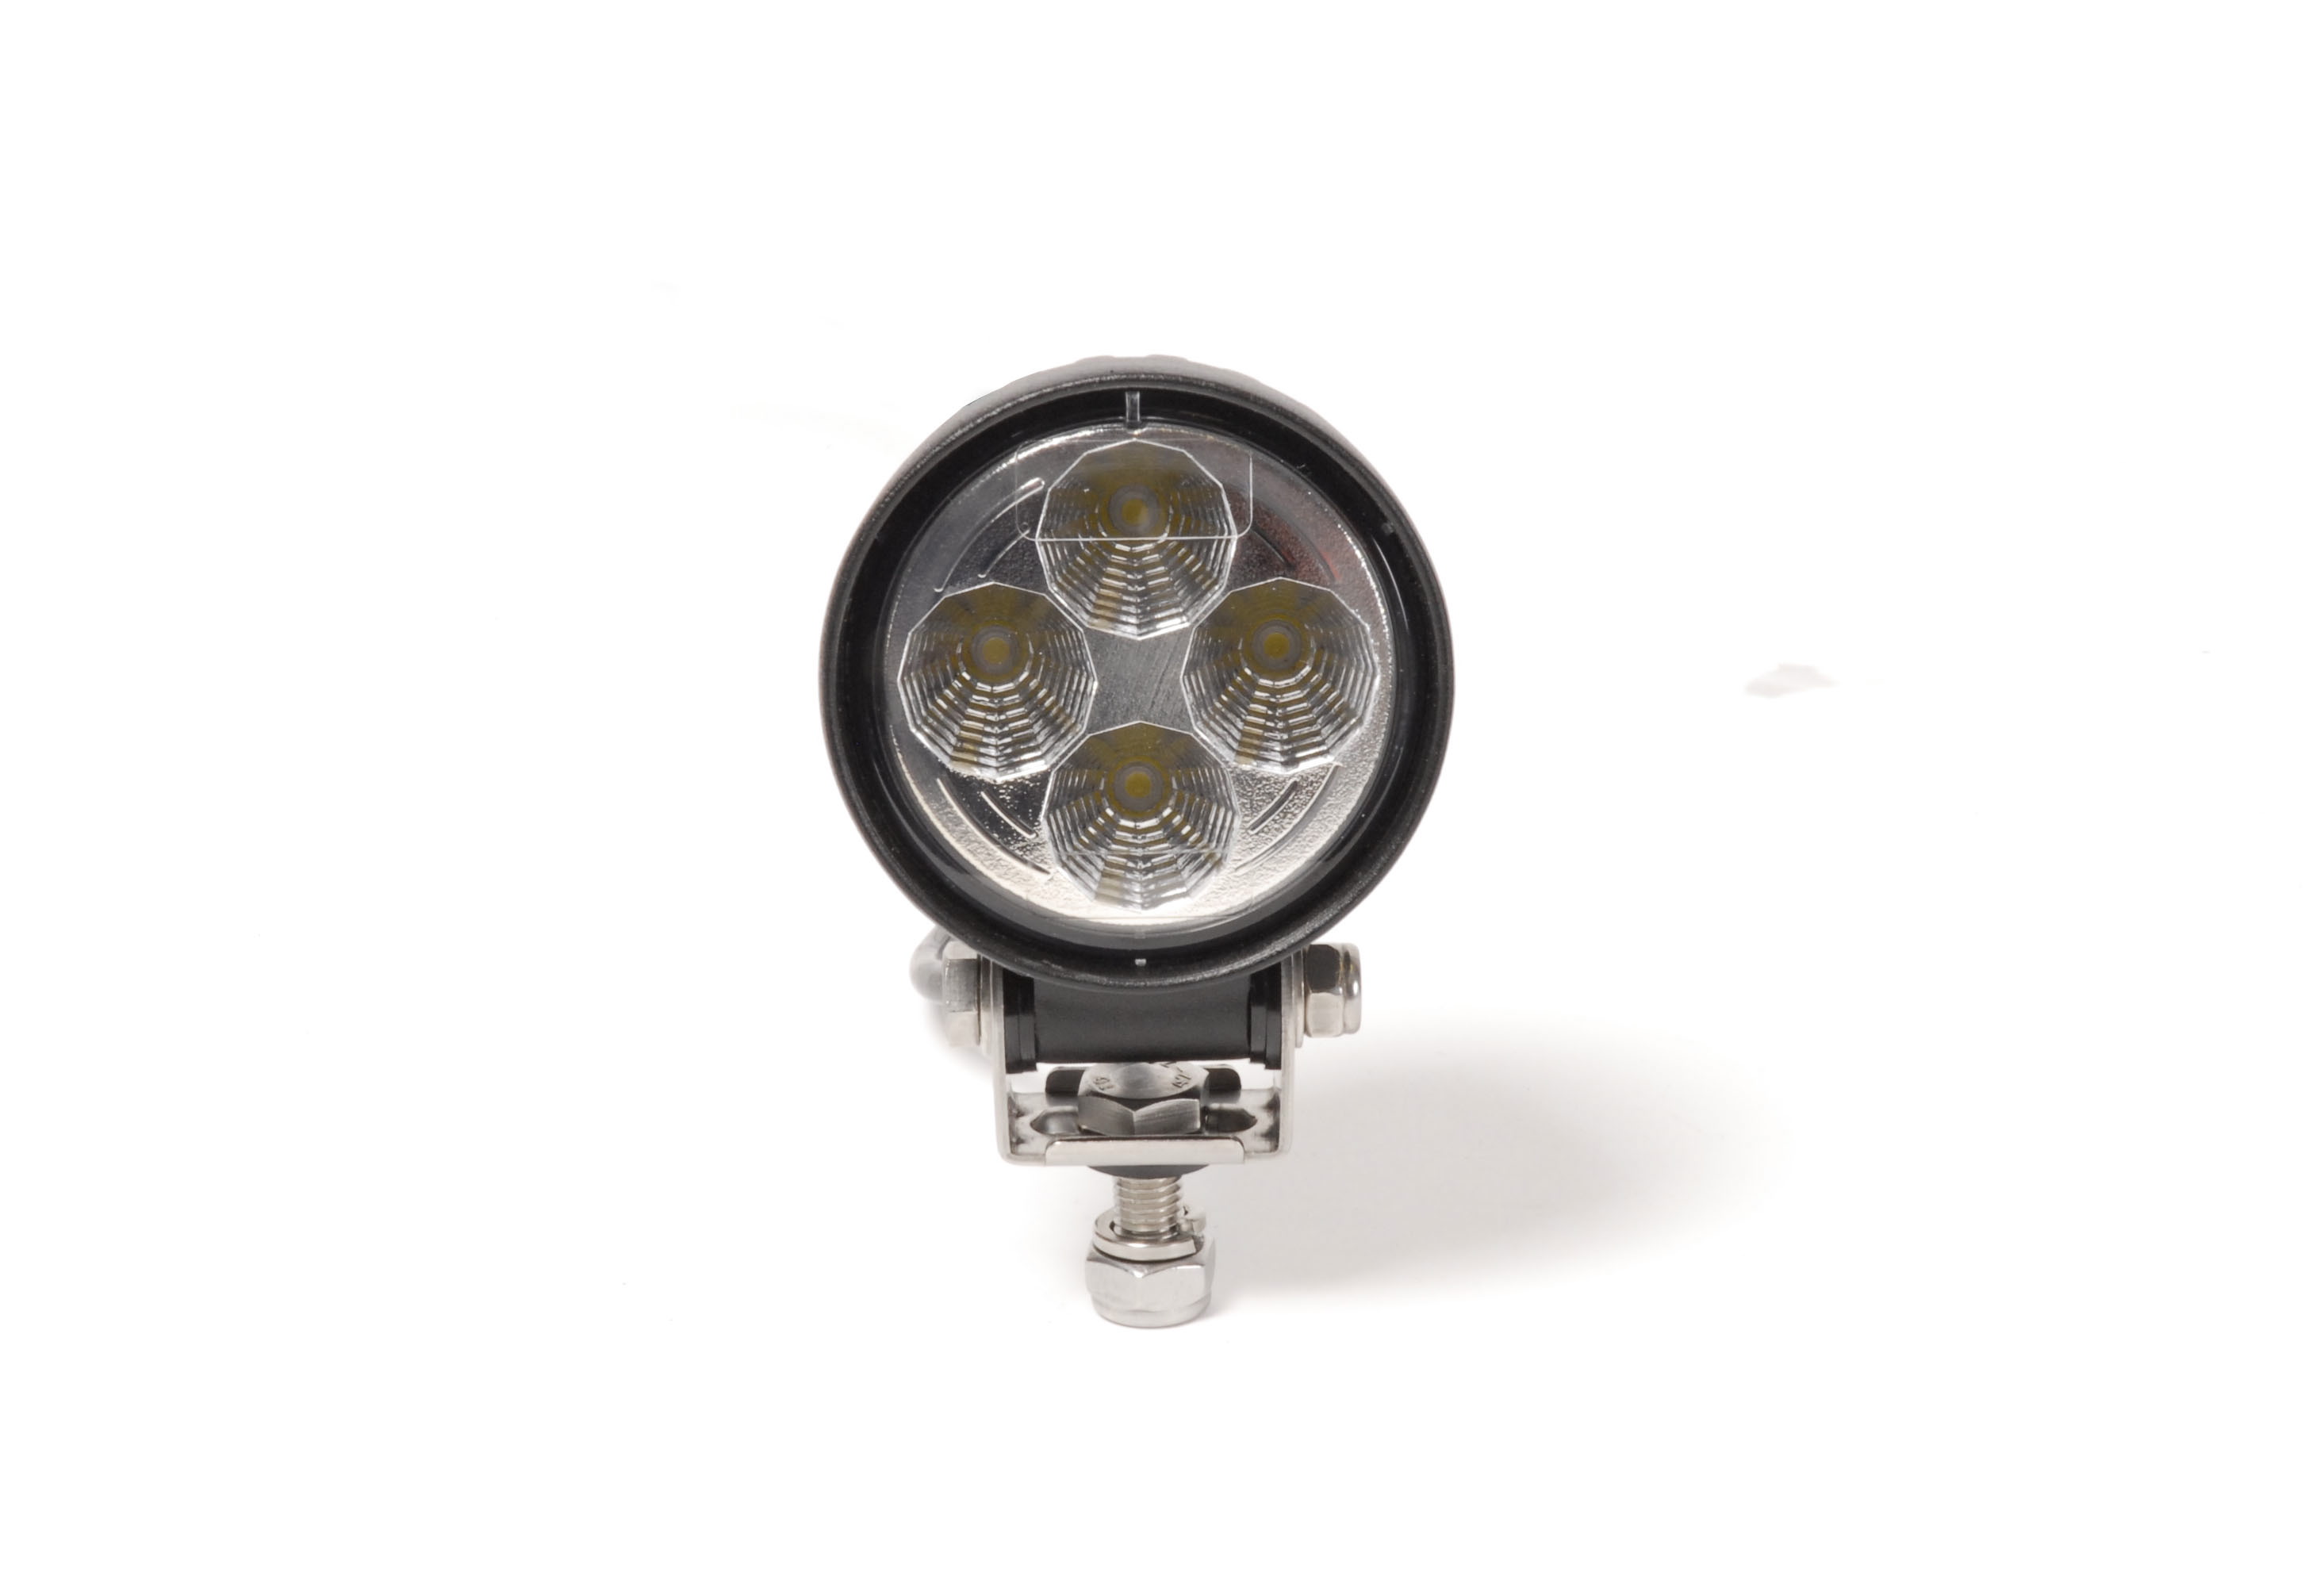 Britax L80 LED 600 lumen work lamp